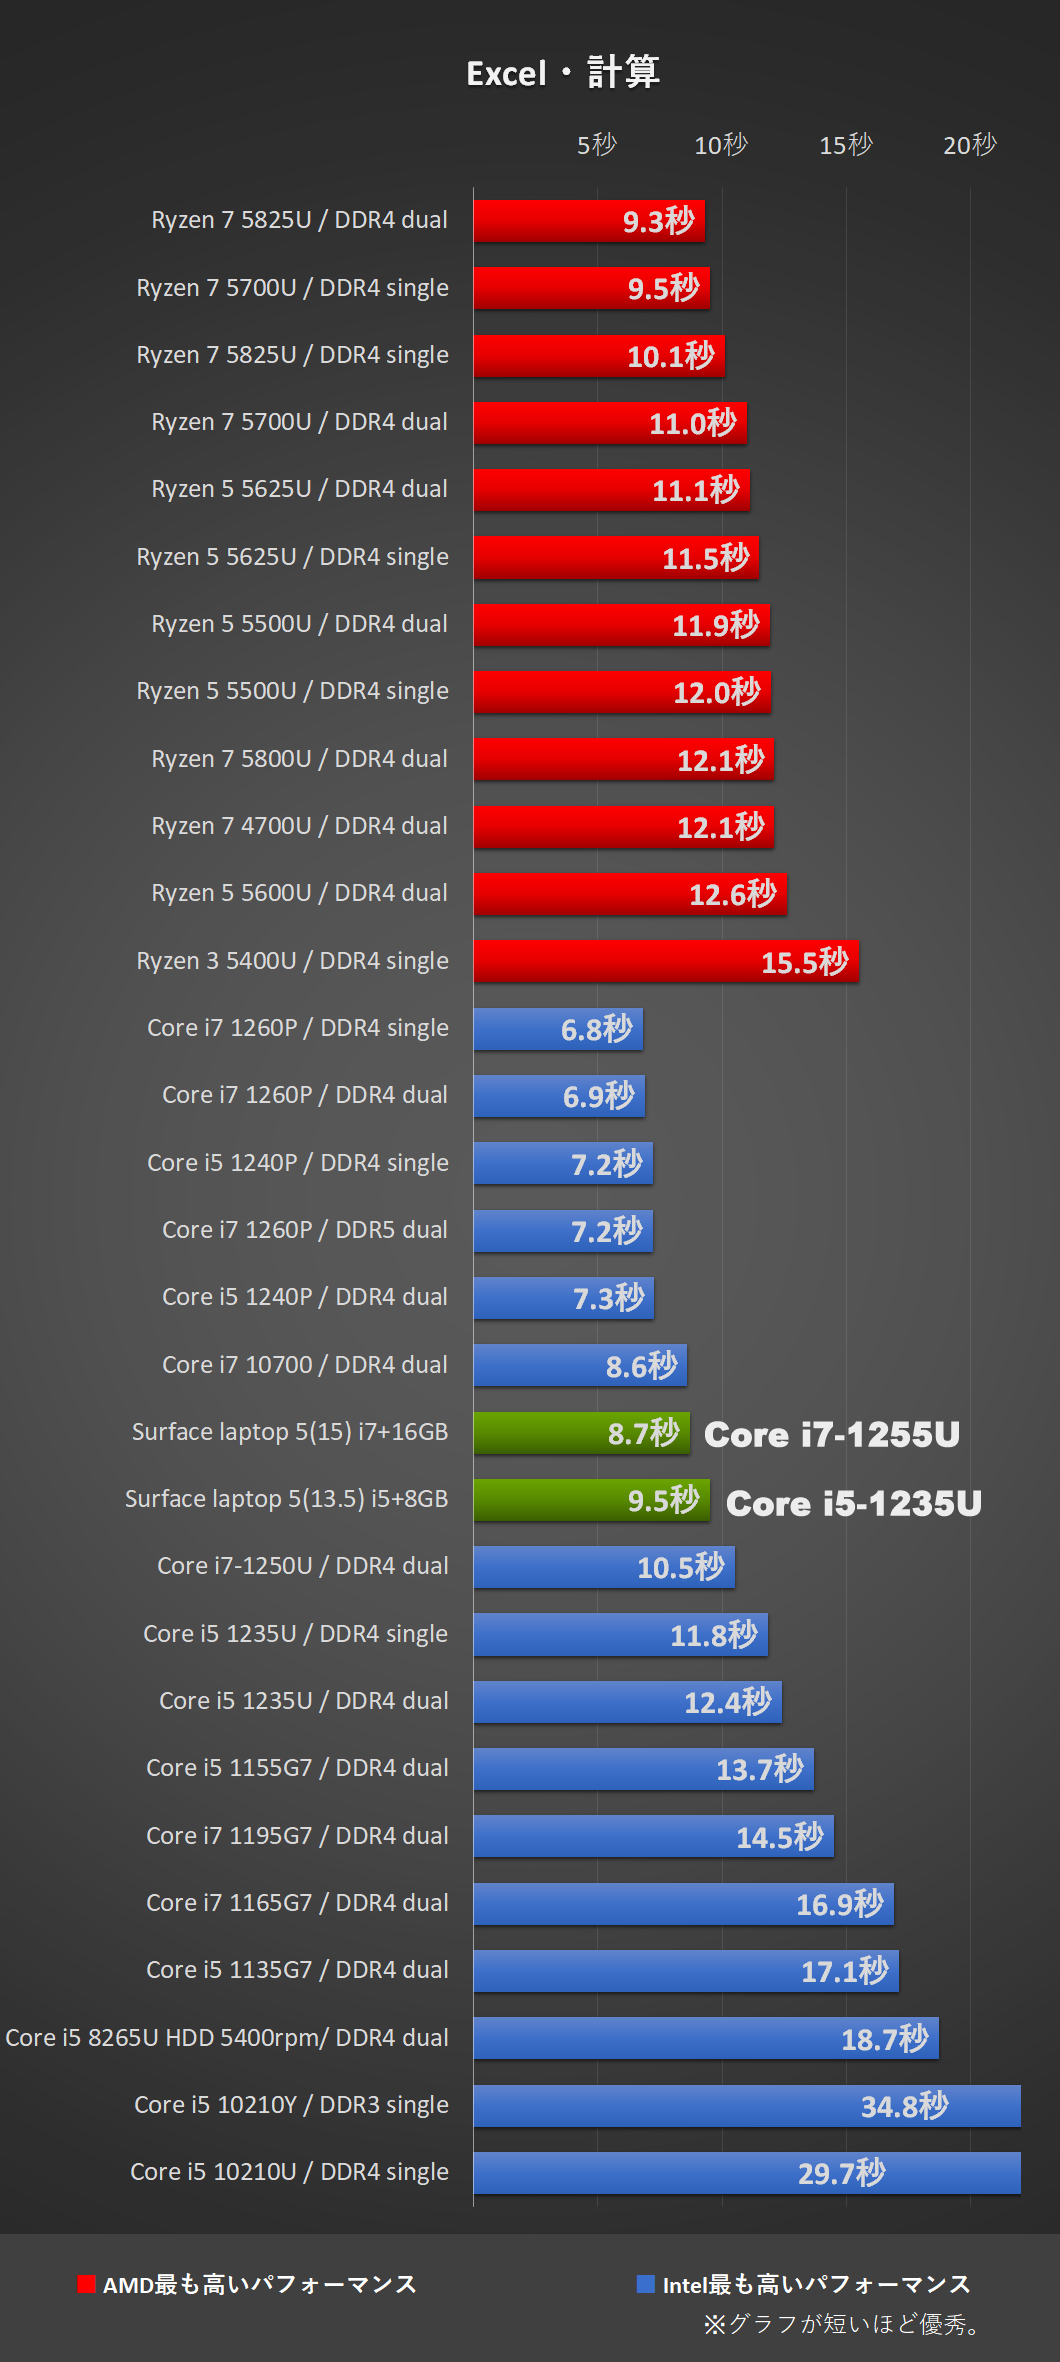 「Surface laptop 5」Core i5-1235Uにて、Excel計算処理時間比較